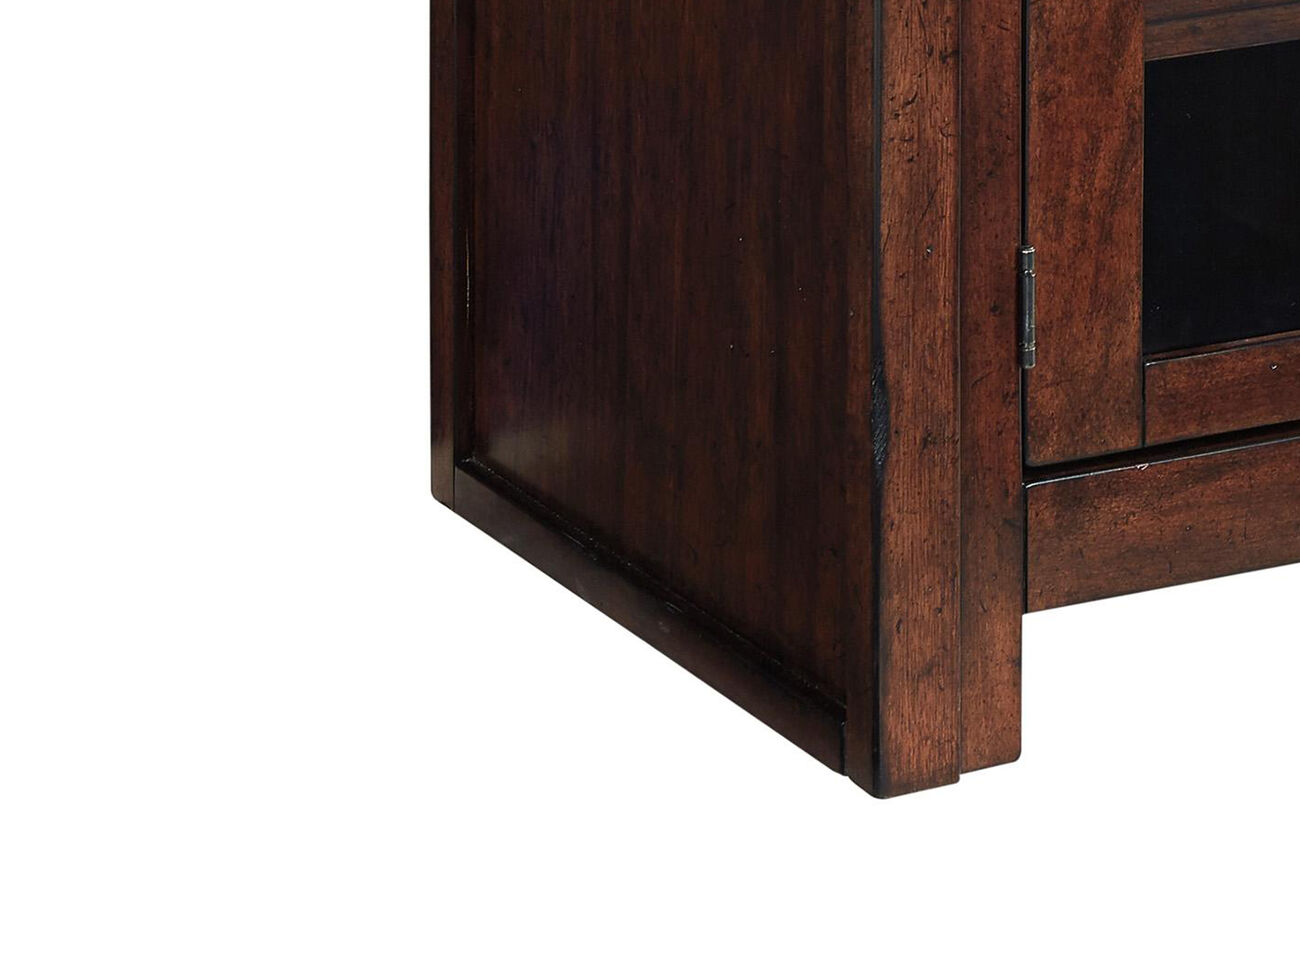 2 Door Wooden TV Stand with 2 Cabinets and Adjustable Shelf, Medium, Brown